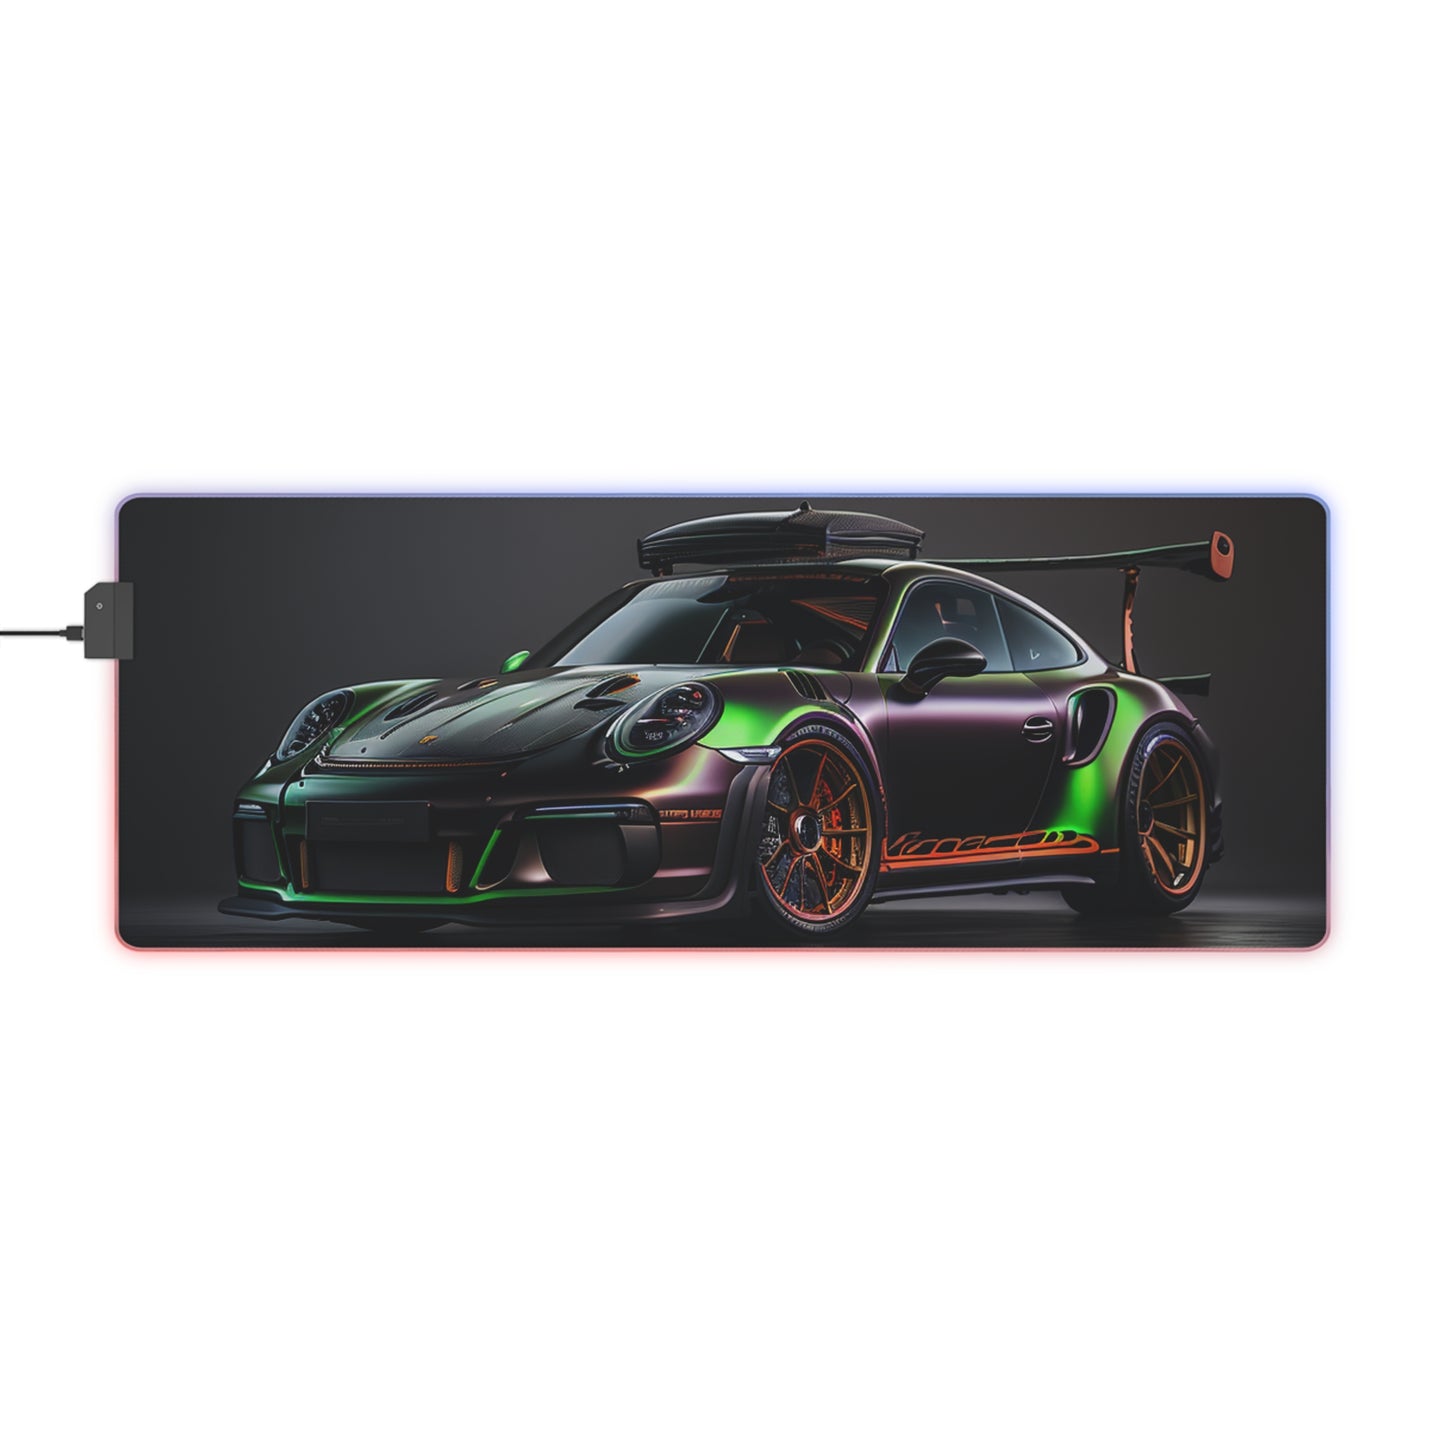 LED Gaming Mouse Pad Porsche Color 2